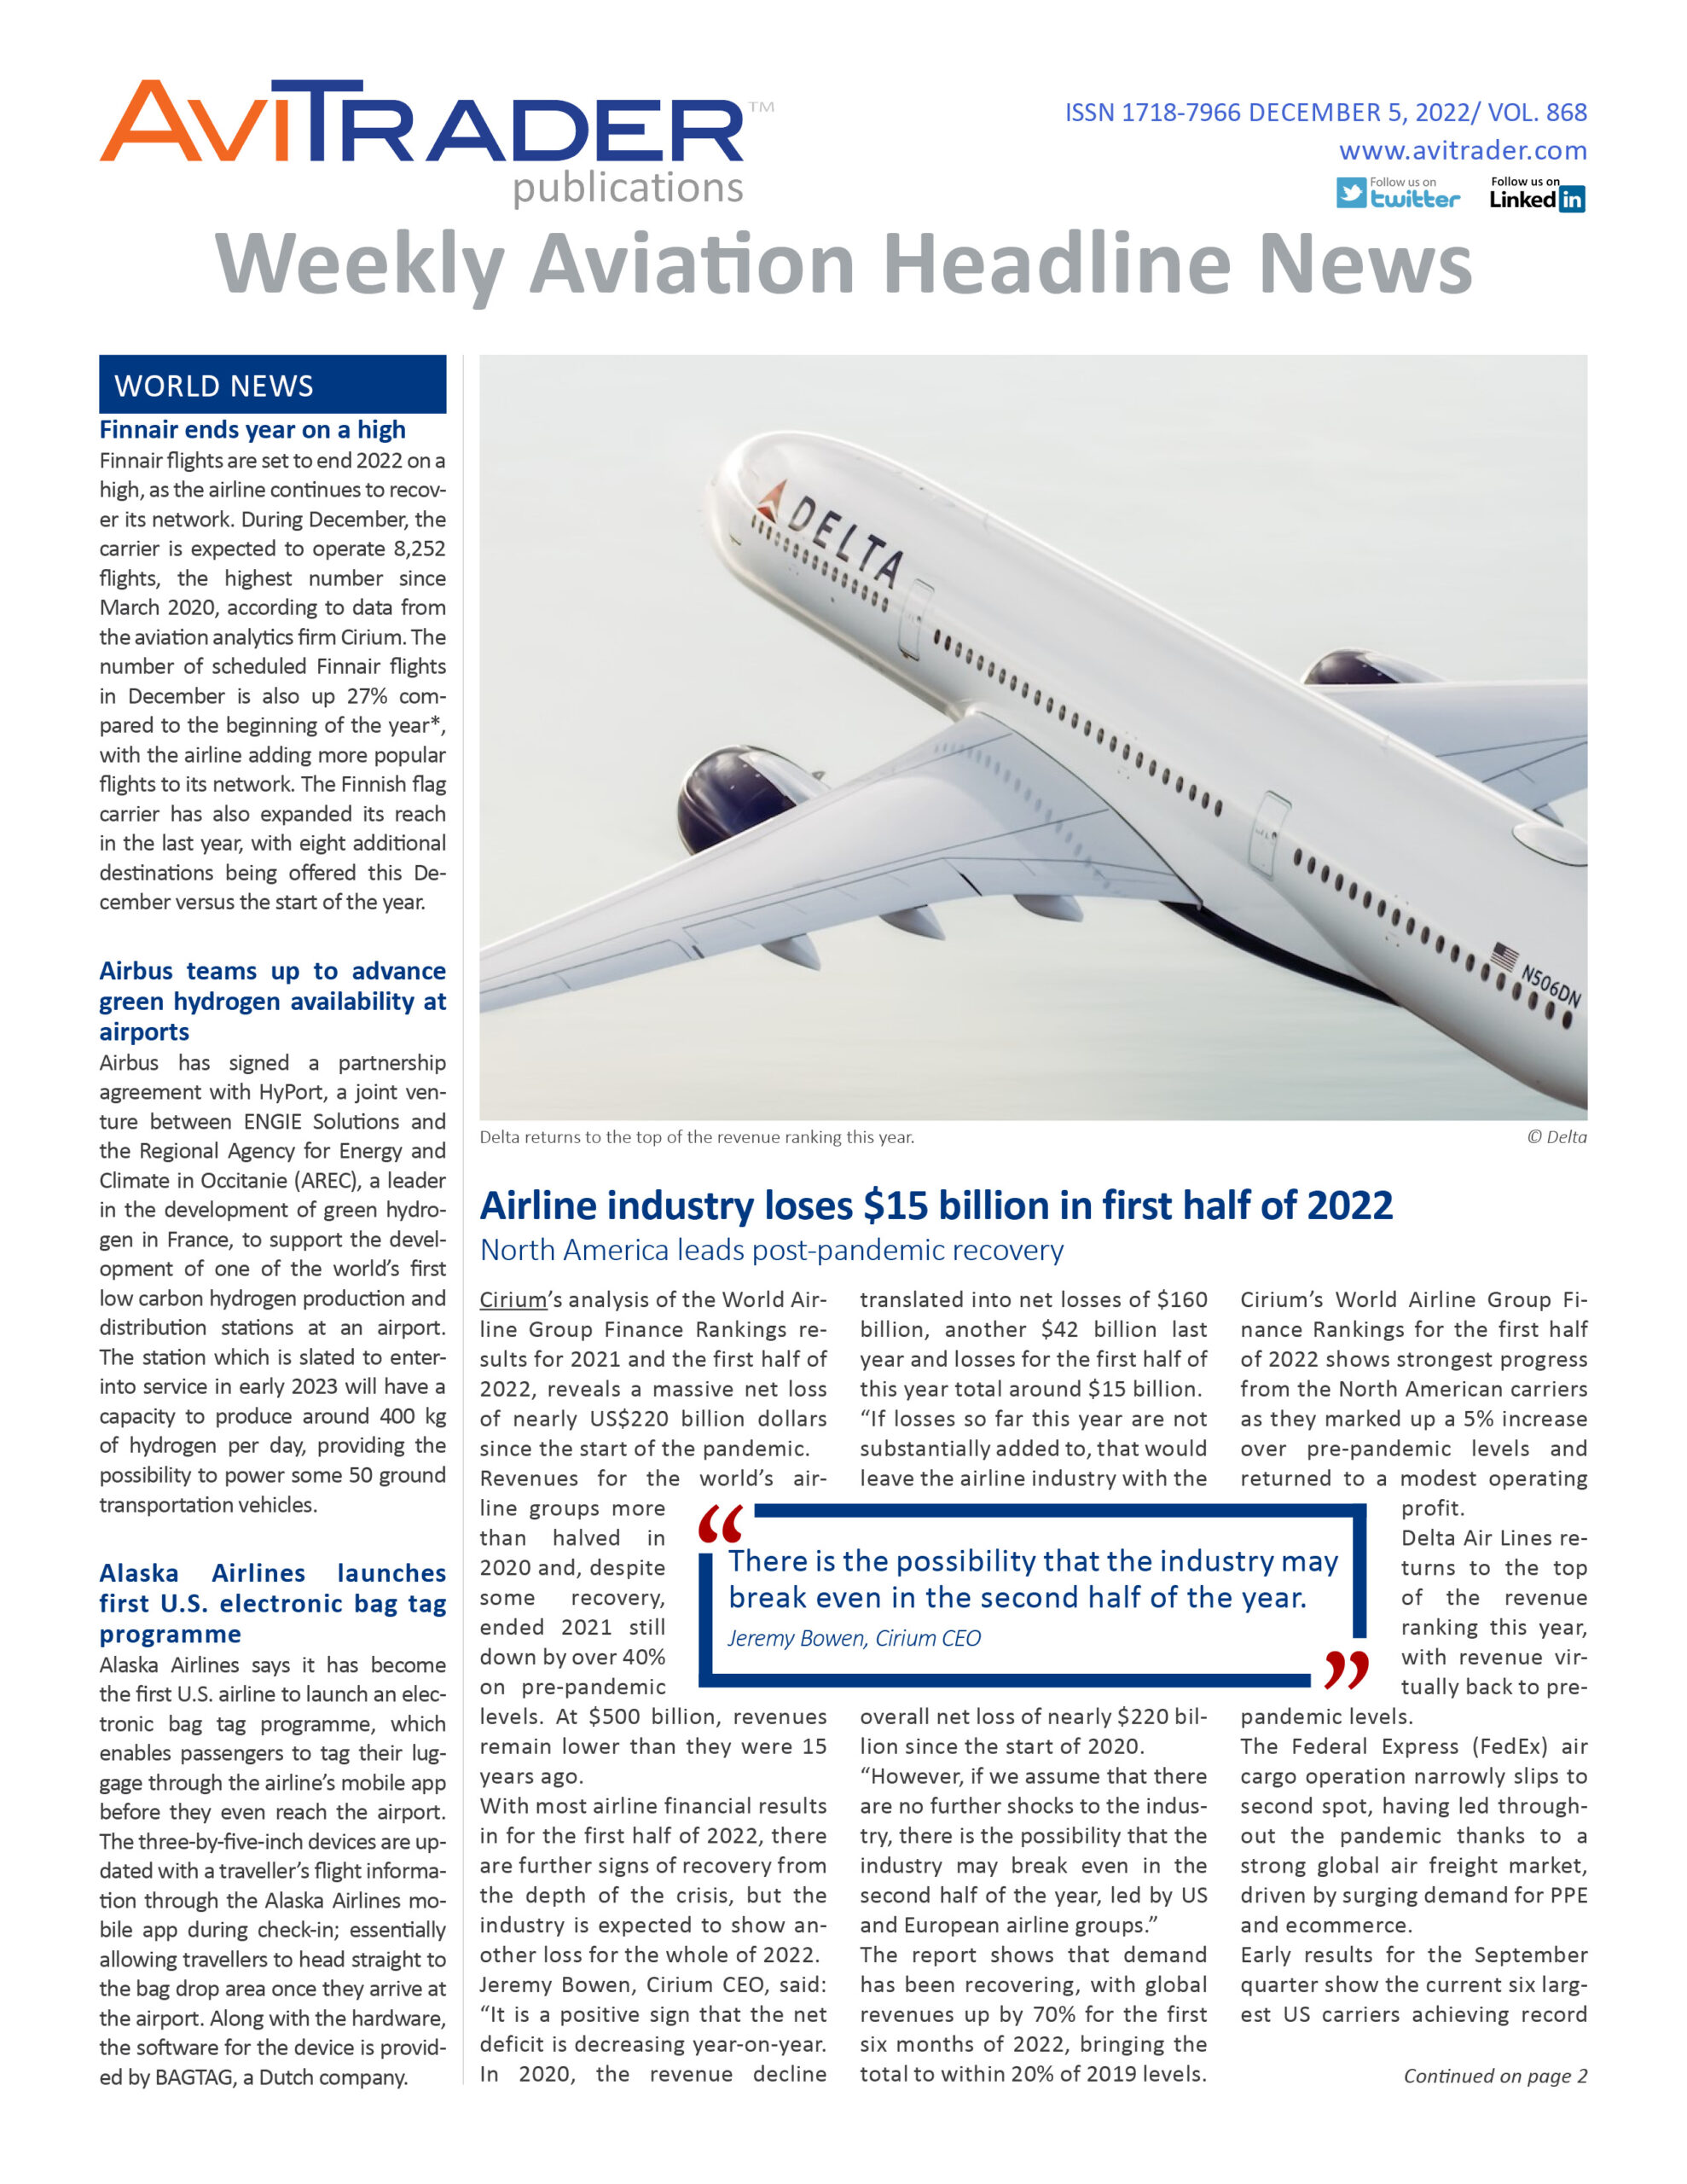 AviTrader_Weekly_Headline_News_Cover_2022-12-05